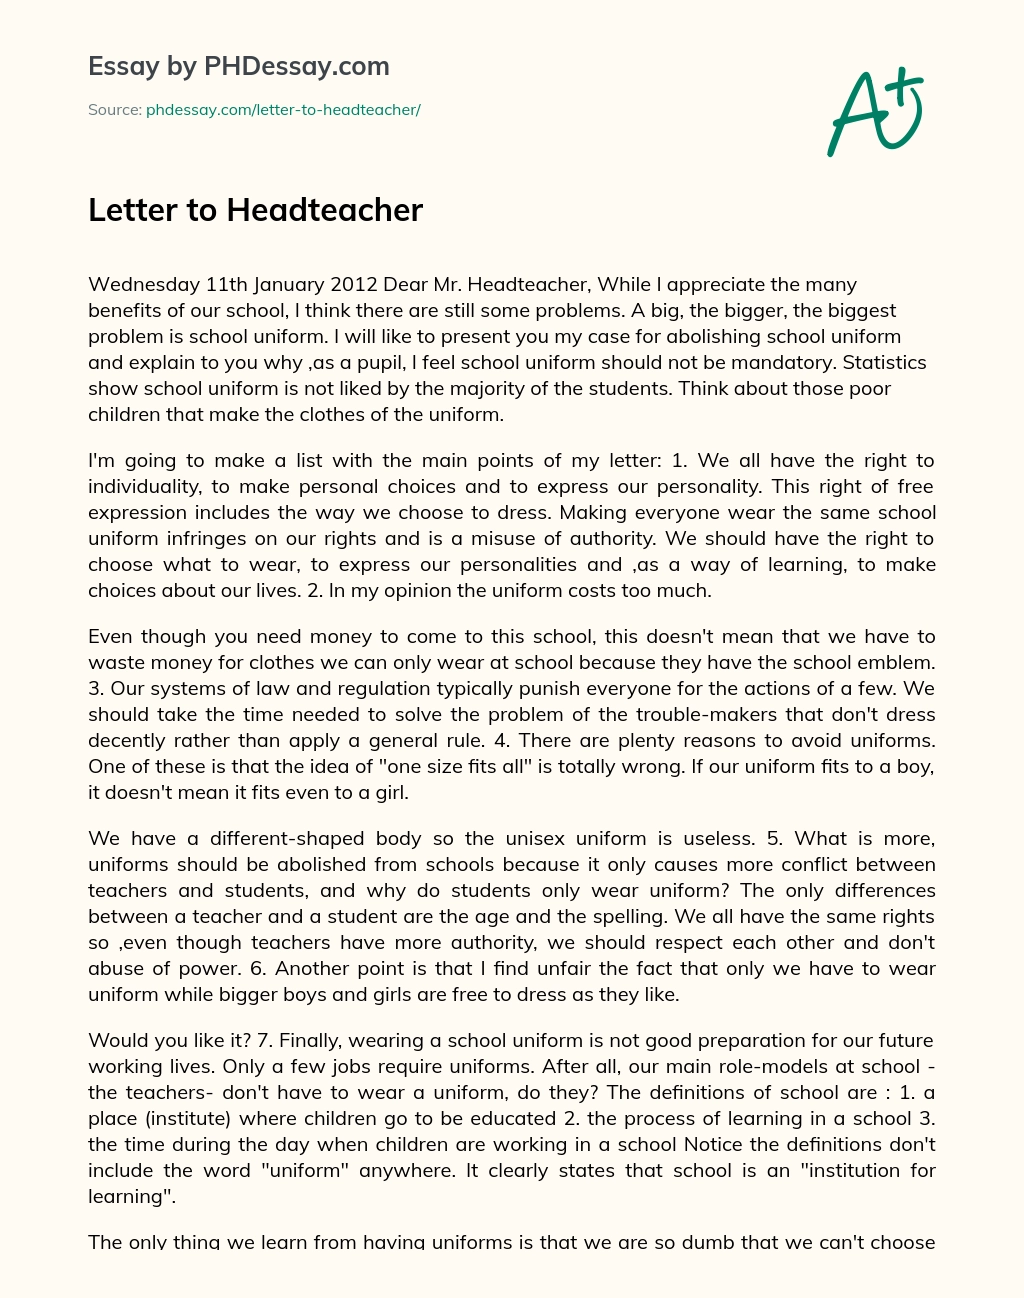 Letter to Headteacher on School Uniform essay